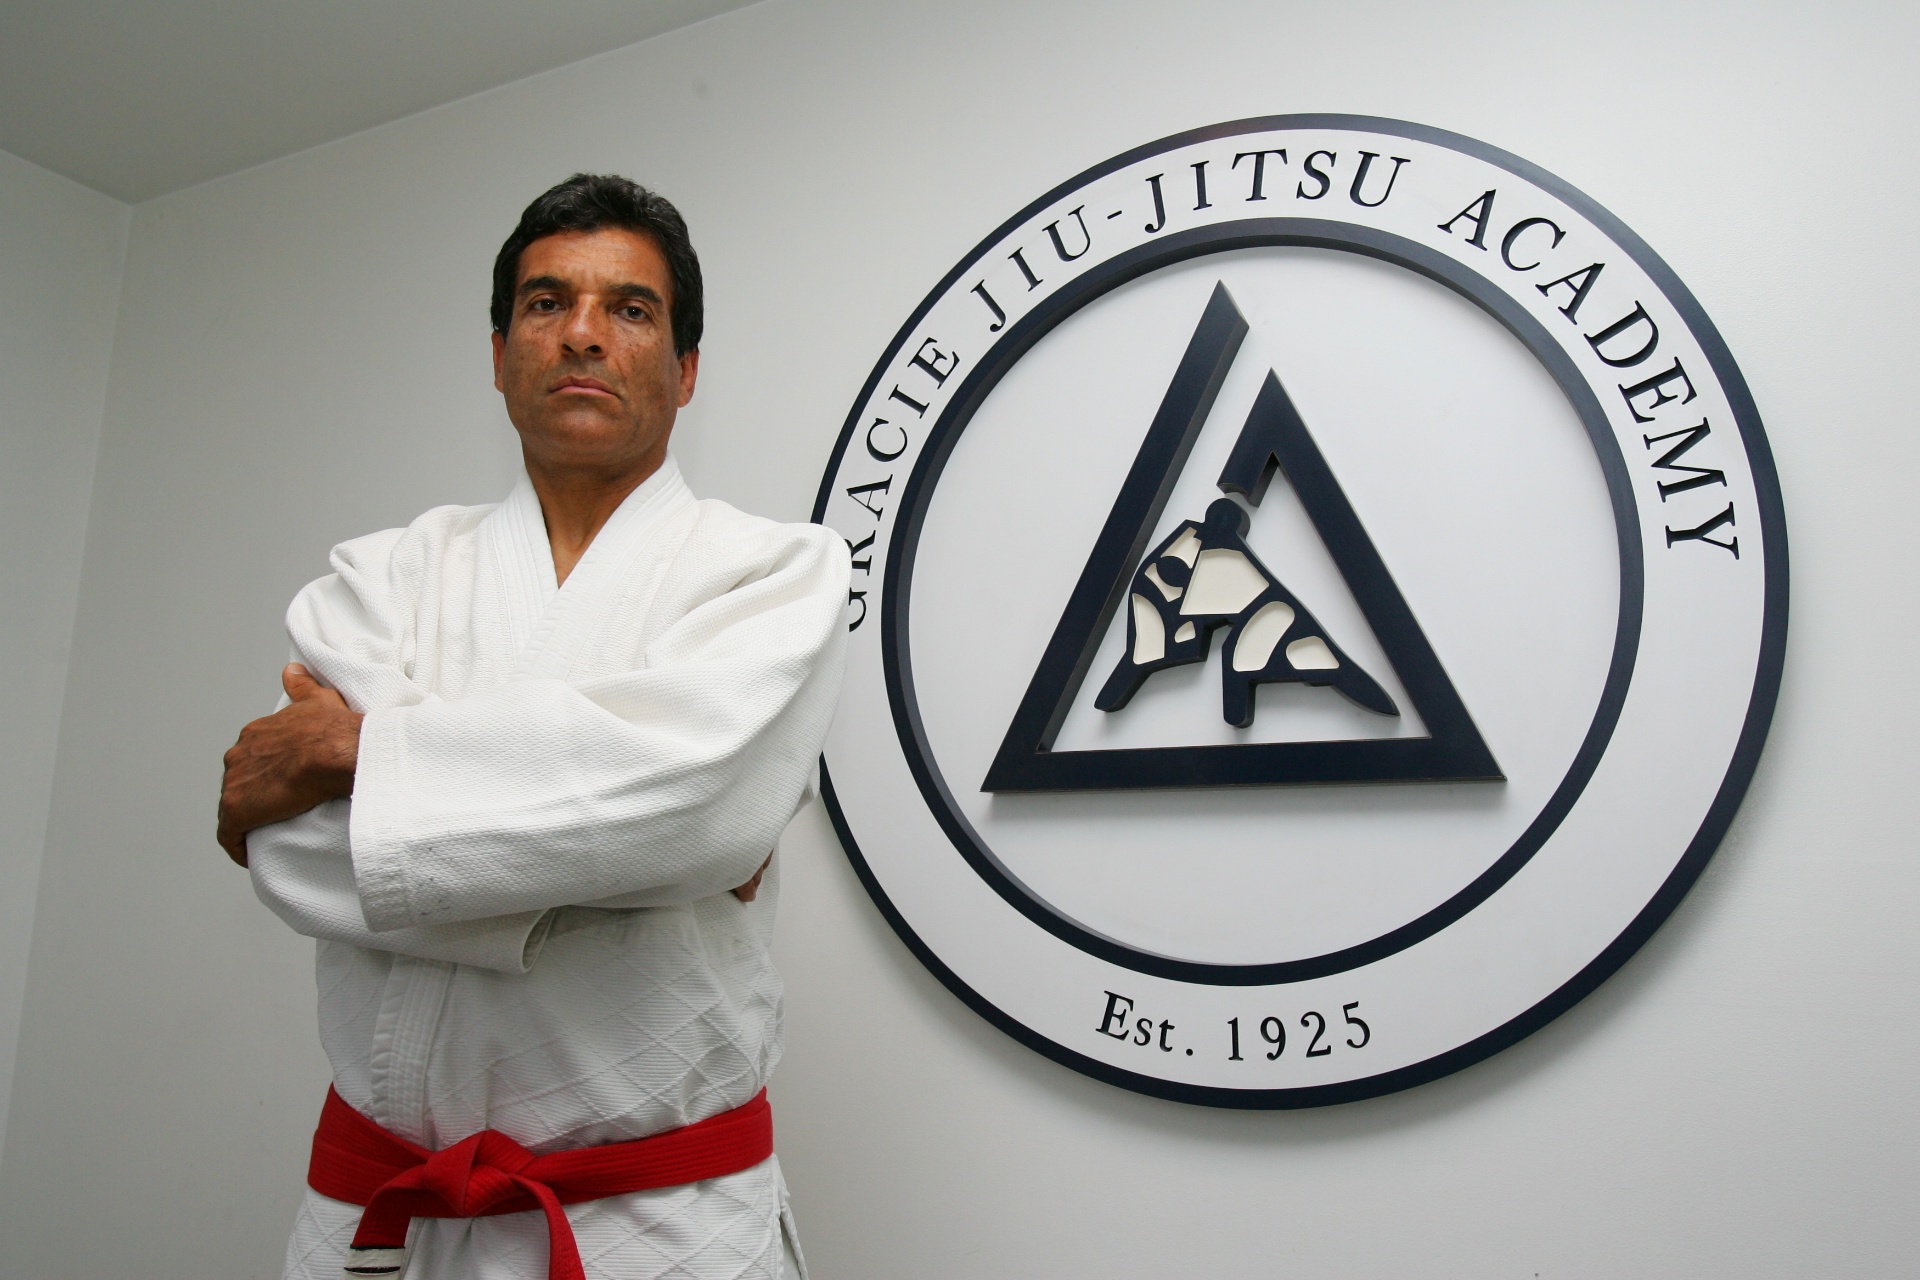 O Grande Mestre 4 – kungfu.doc